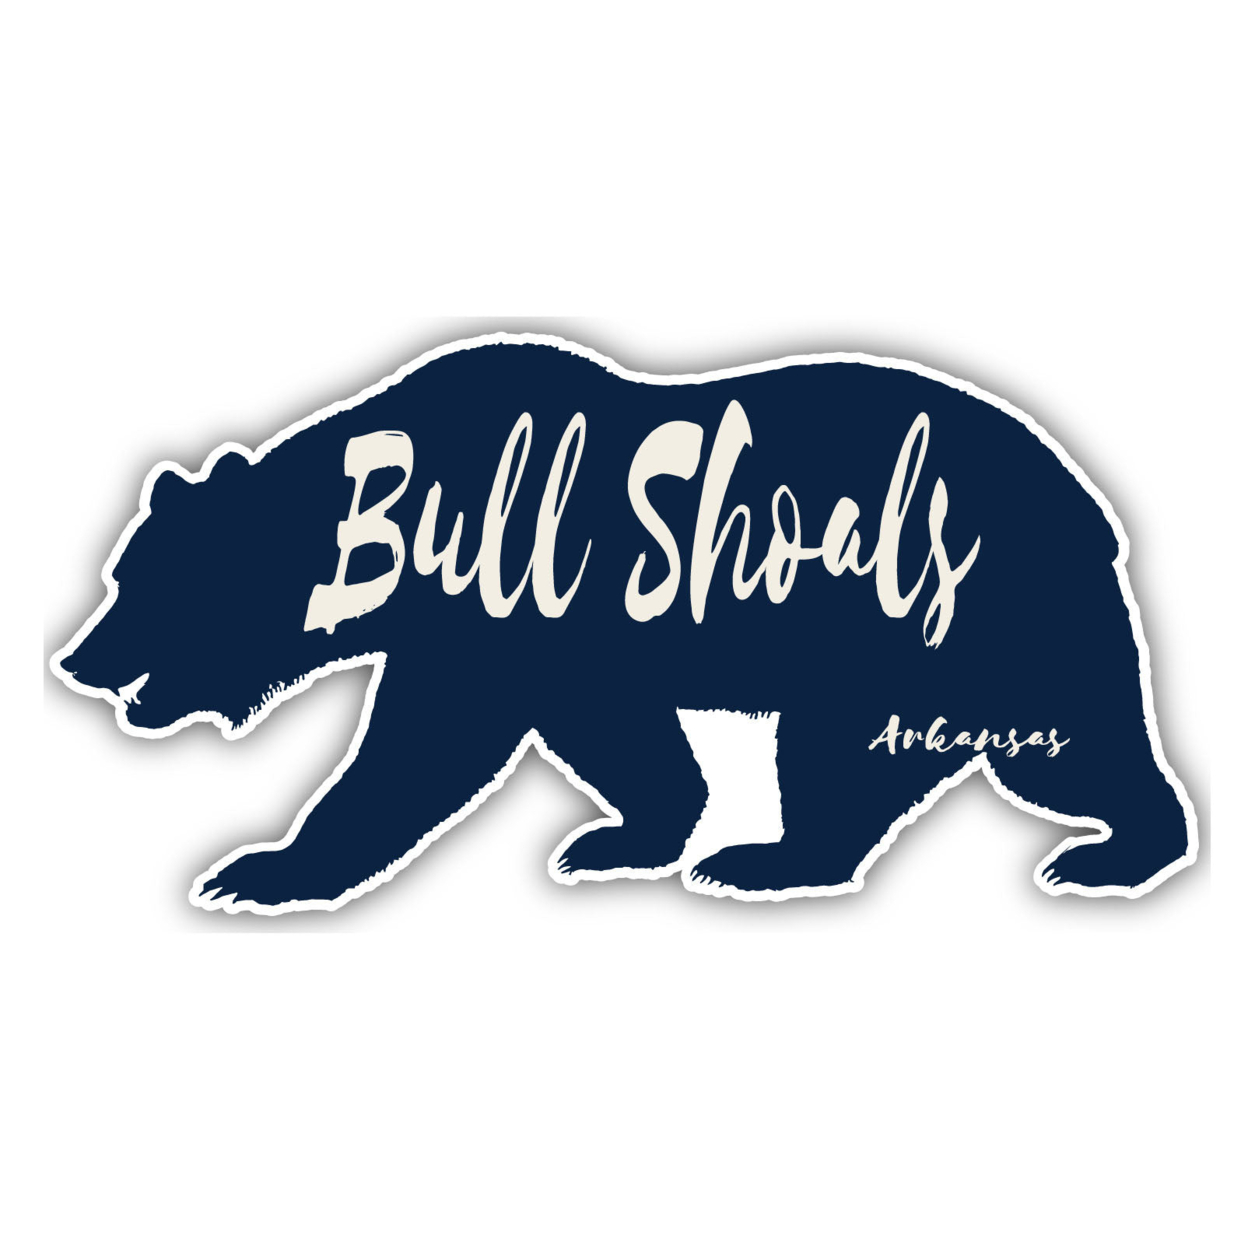 Bull Shoals Arkansas Souvenir Decorative Stickers (Choose Theme And Size) - 4-Pack, 8-Inch, Adventures Awaits